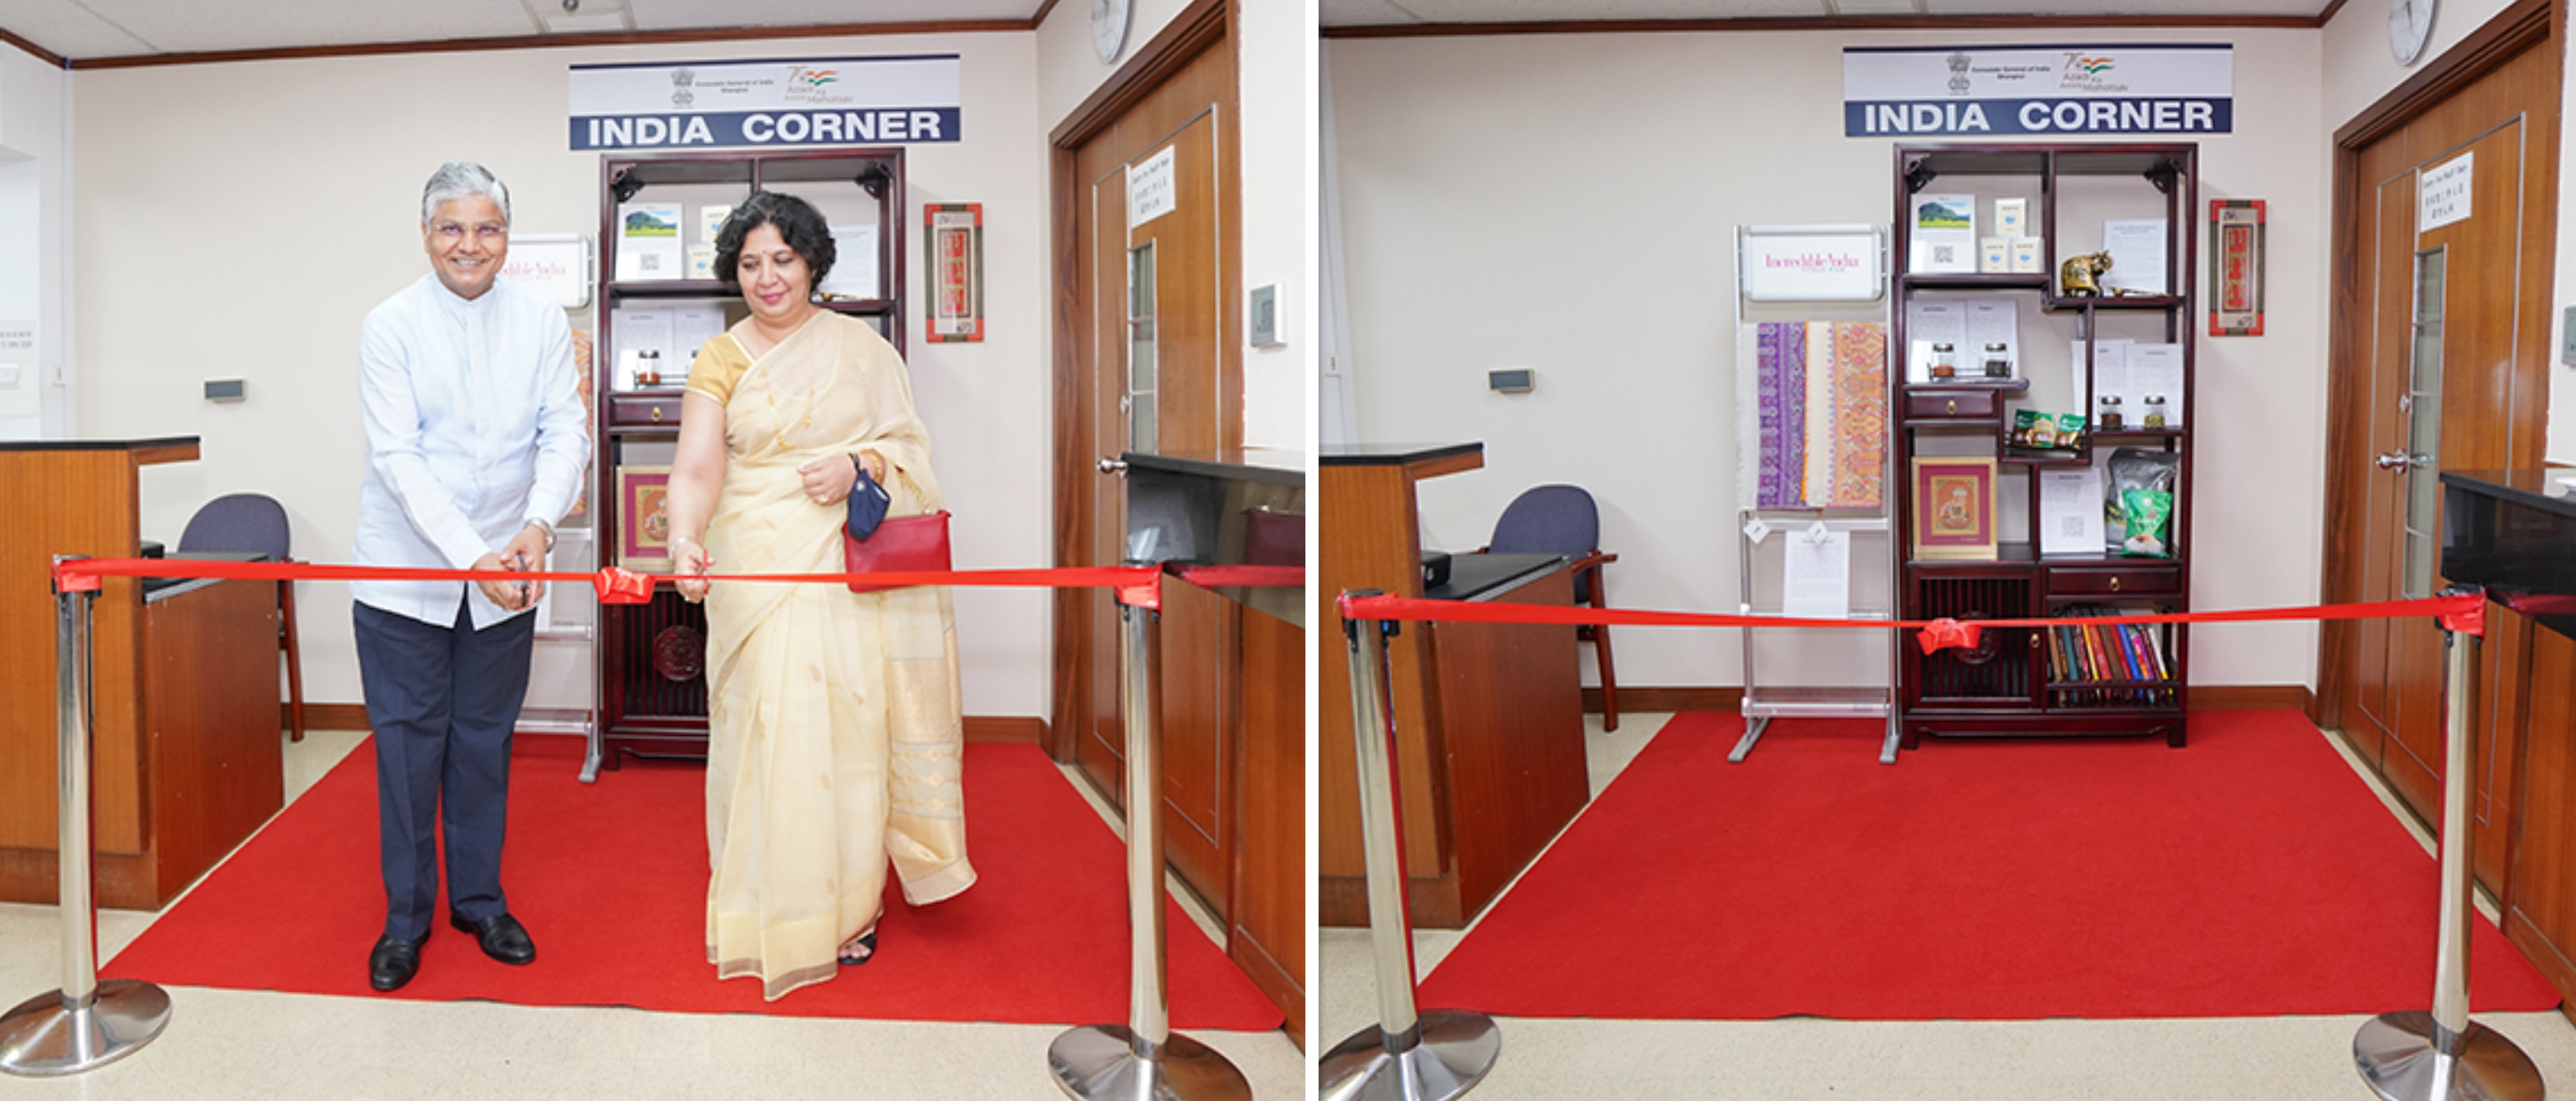 Inauguration of ‘India Corner’, showcasing products and handicrafts from various states of India, by Ambassador Shri Pradeep Rawat and Mrs. Shruti Rawat.